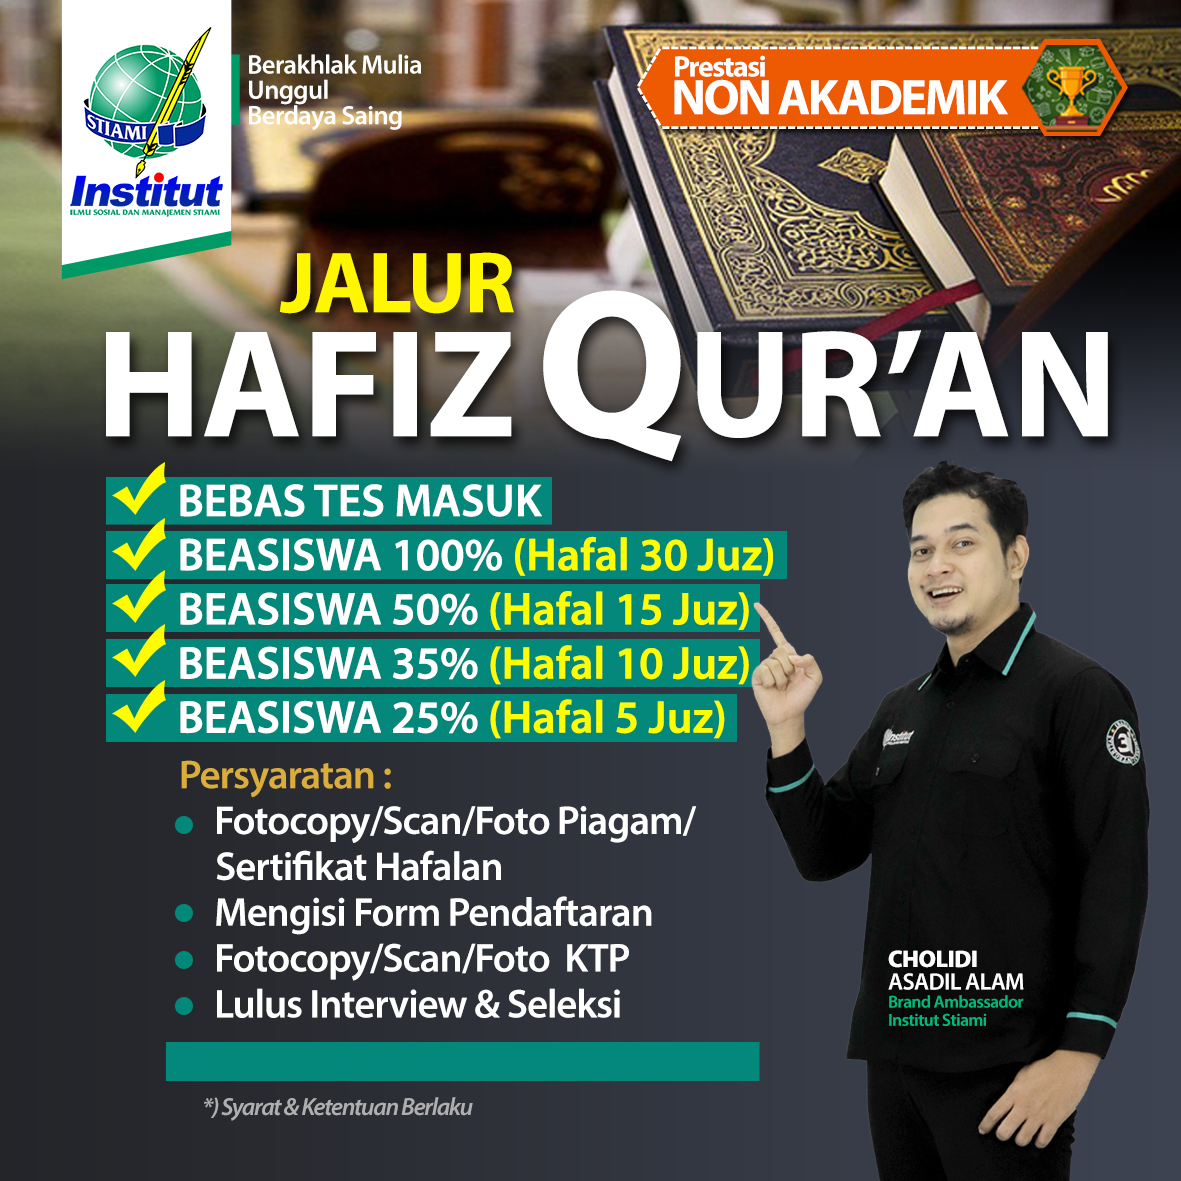 Beasiswa Hafiz Quran